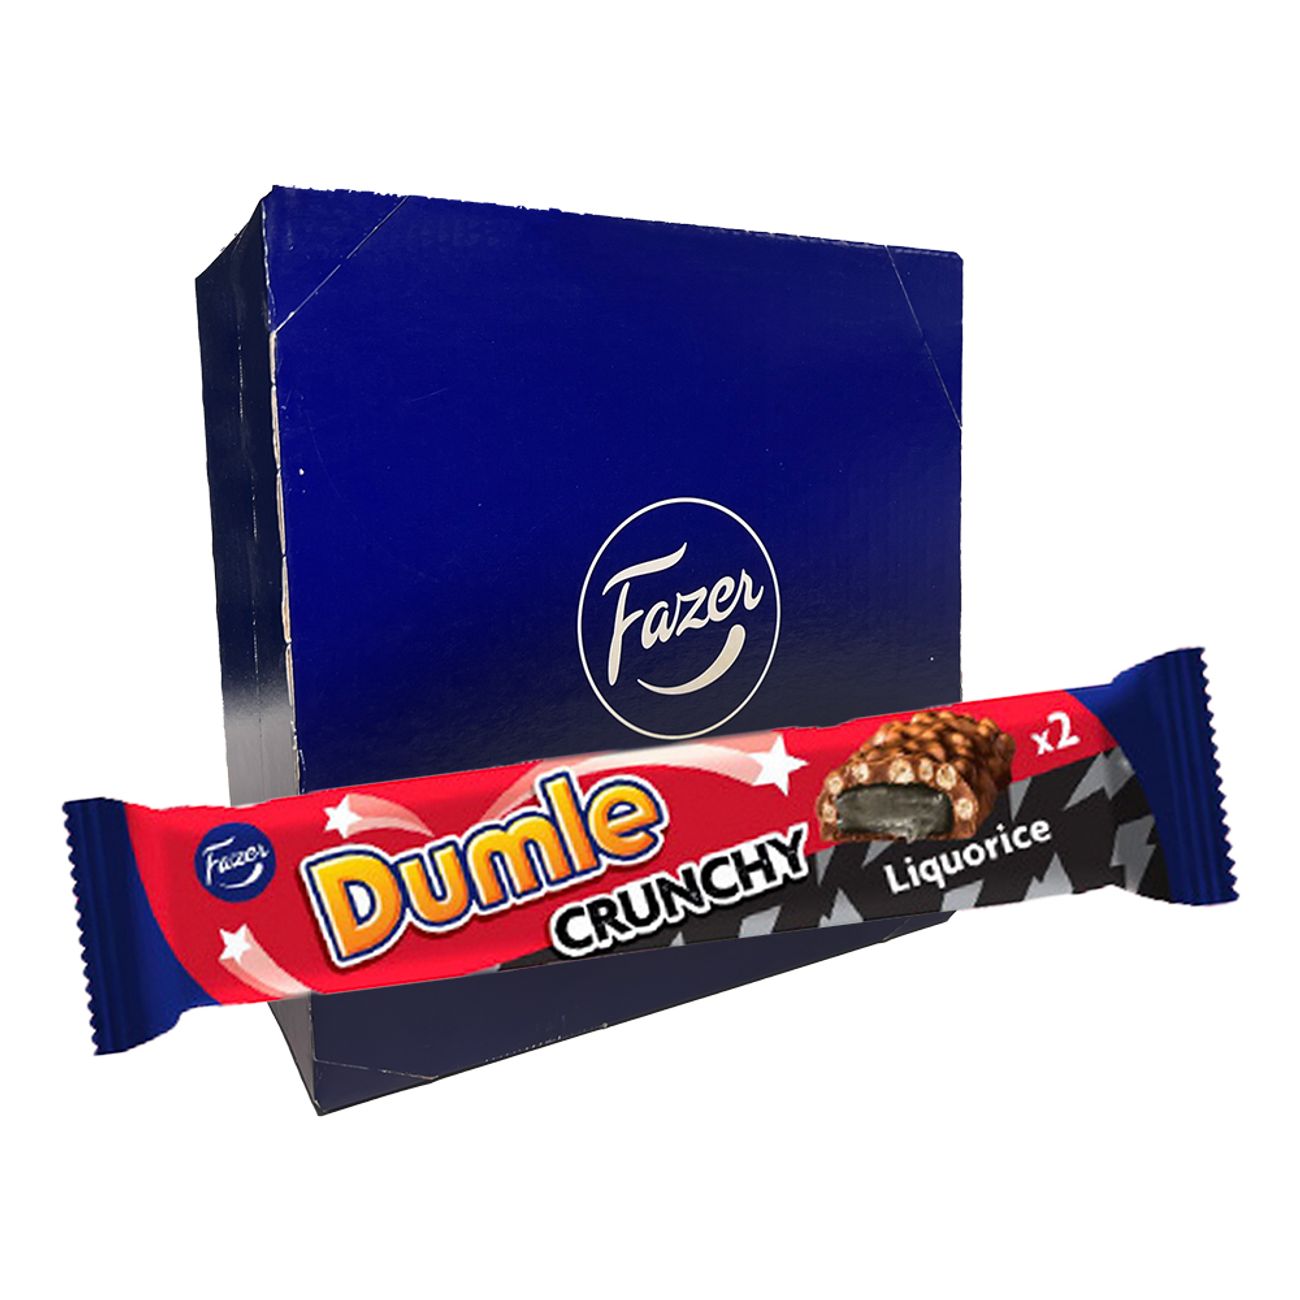 dumle-crunchy-liquorice-dubbel-storpack-102975-1